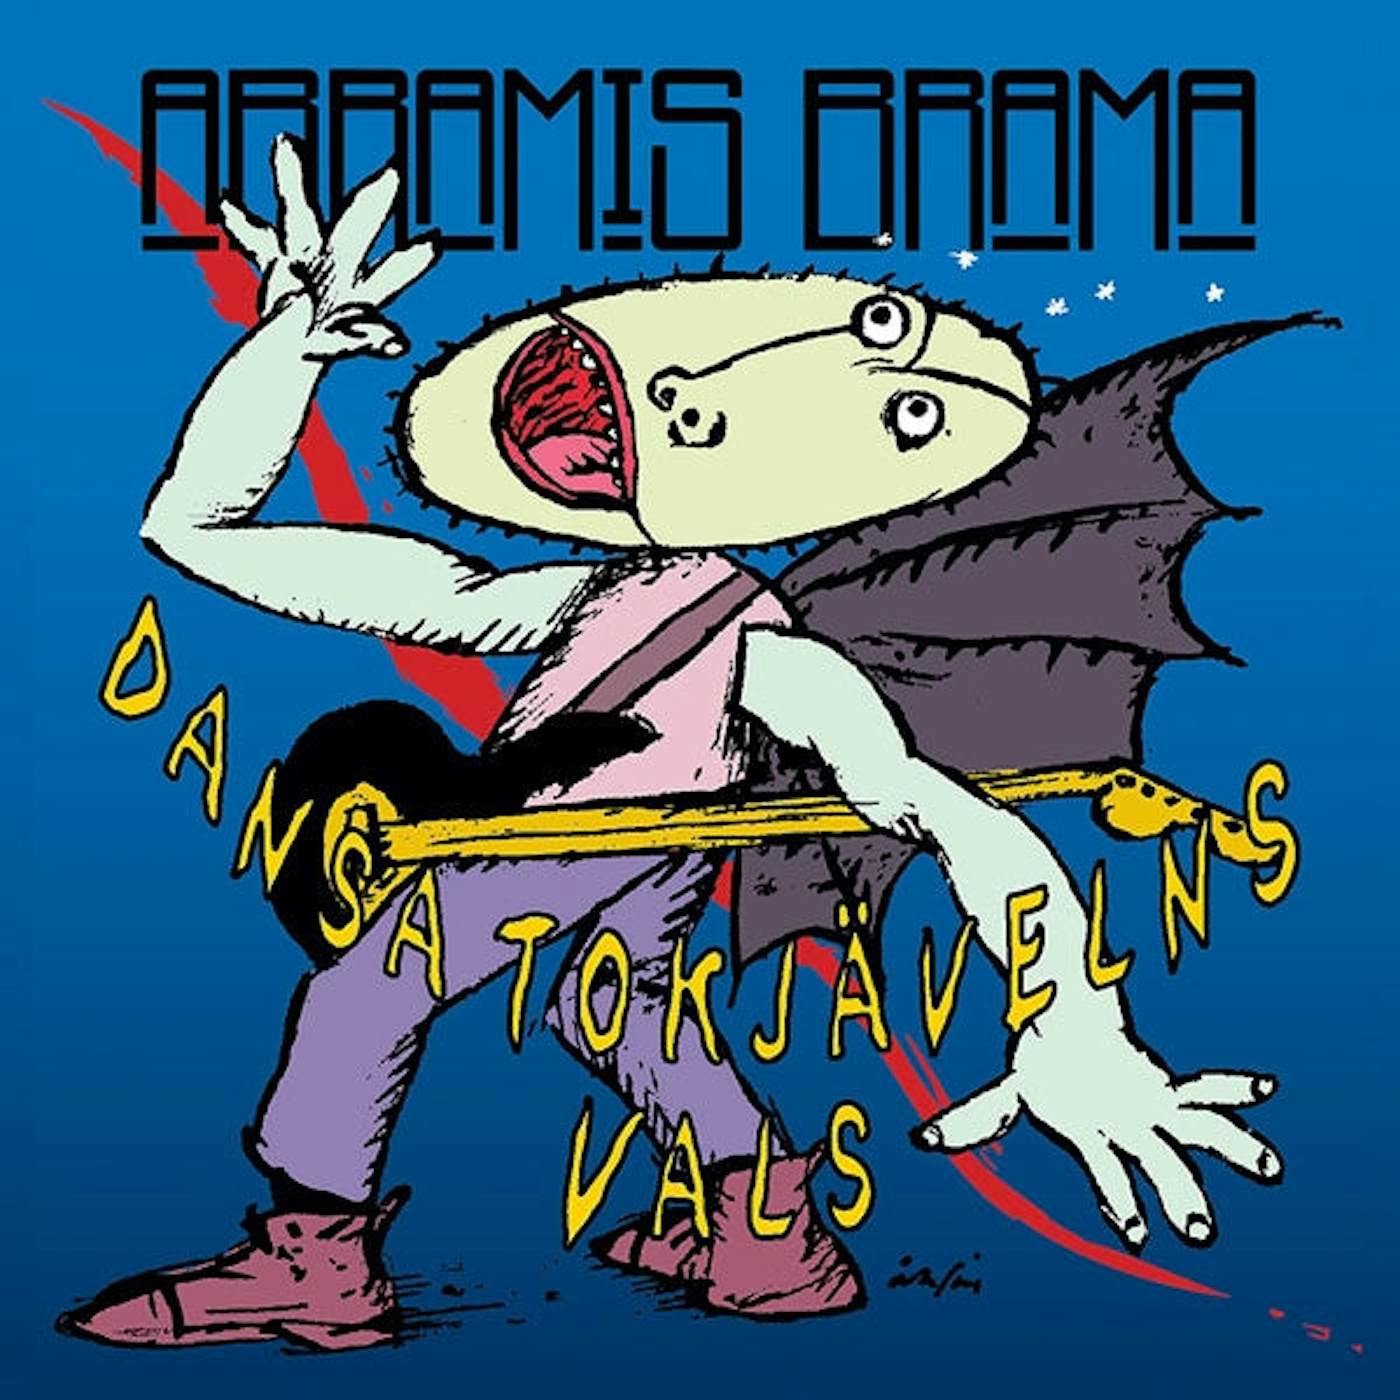 Abramis Brama LP - Dansa Tokjavelns Vals (Vinyl)